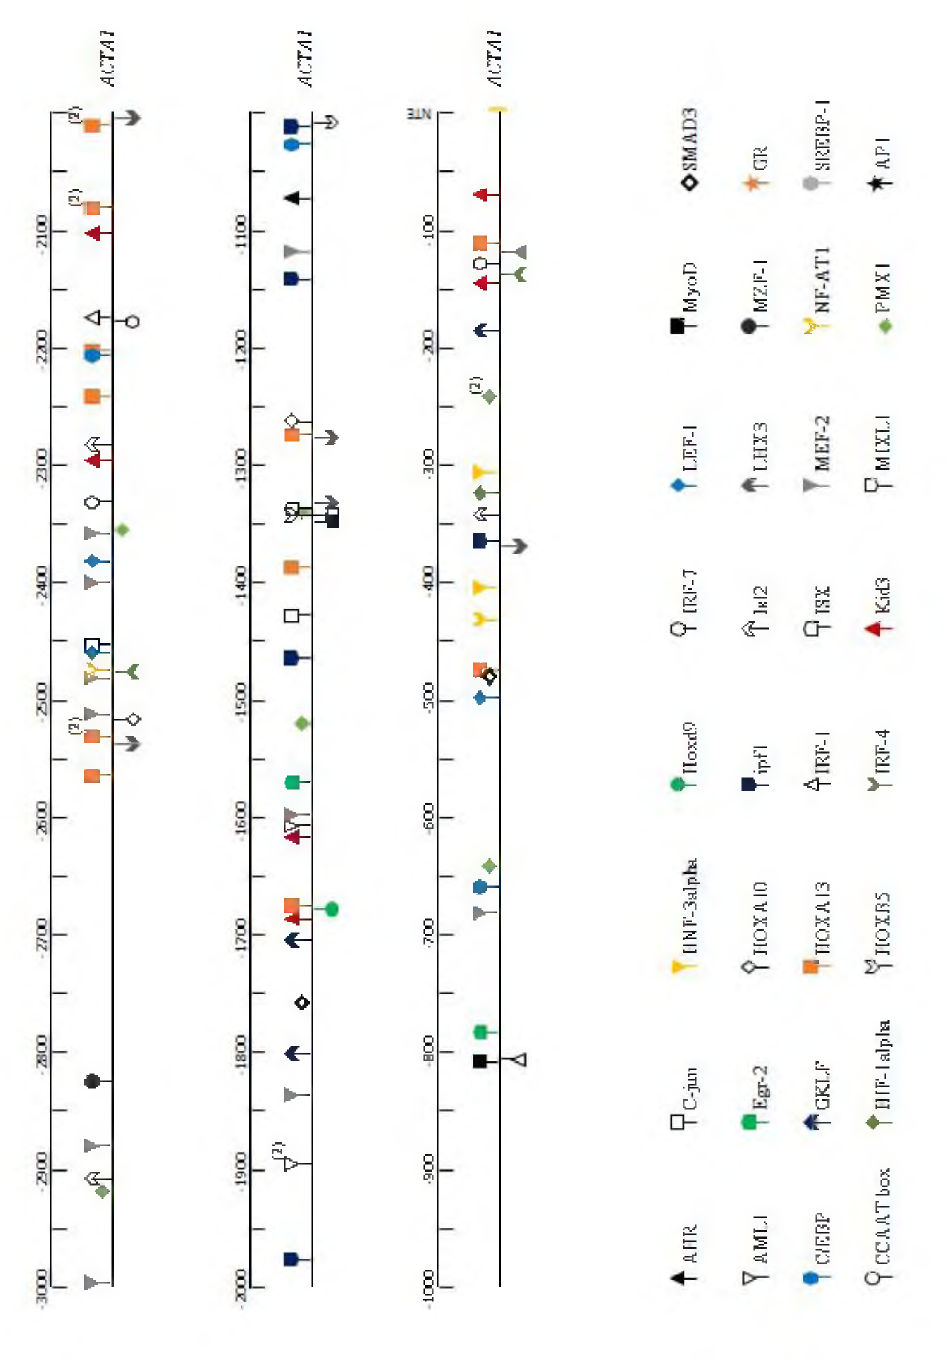 Biomformatic prediction of transcription factor binding motifs in loach actA1 5′-upstream flanking region